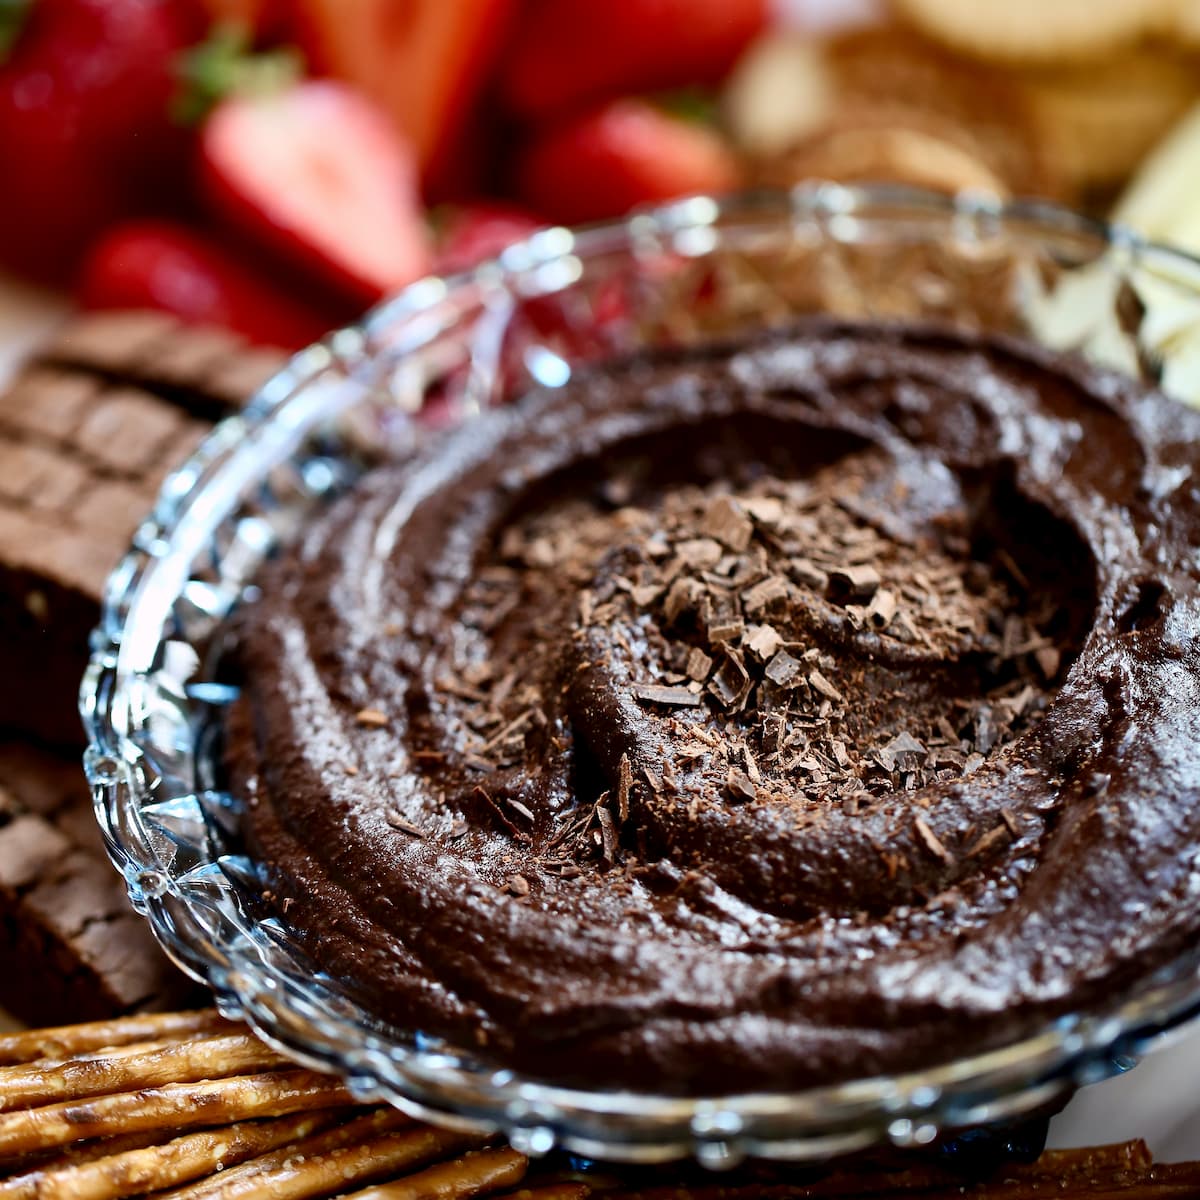 a close up photo of chocolate dessert hummus.